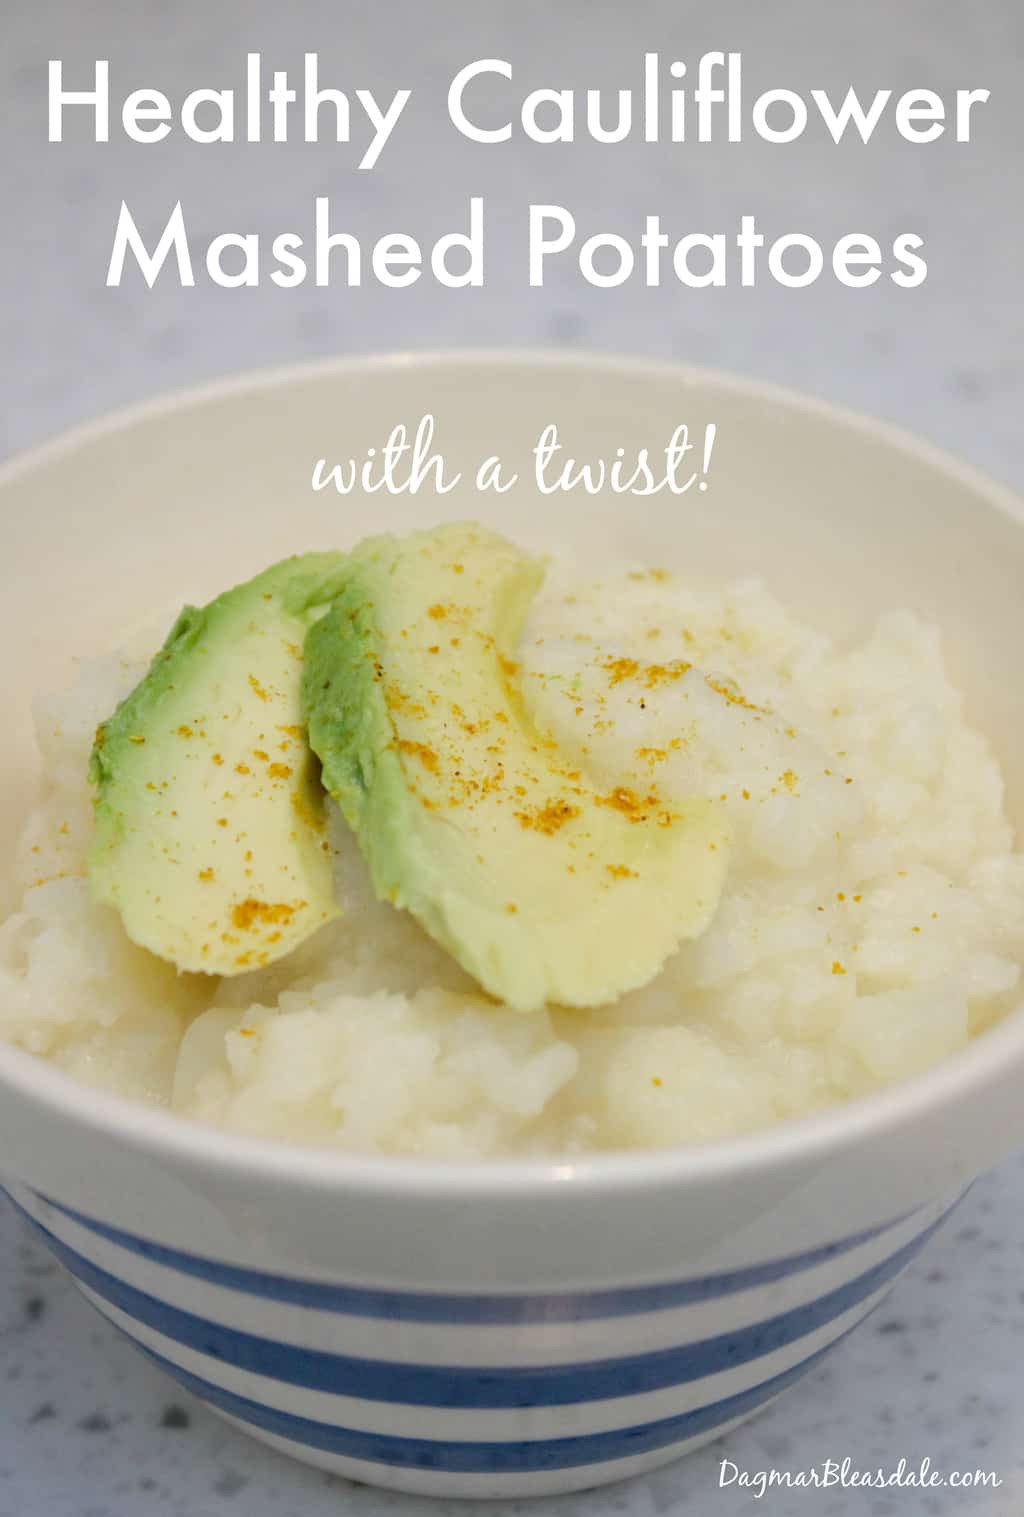 Cauliflower Mashed Potatoes Healthy
 Healthy Cauliflower Mashed Potatoes Recipe With a Twist